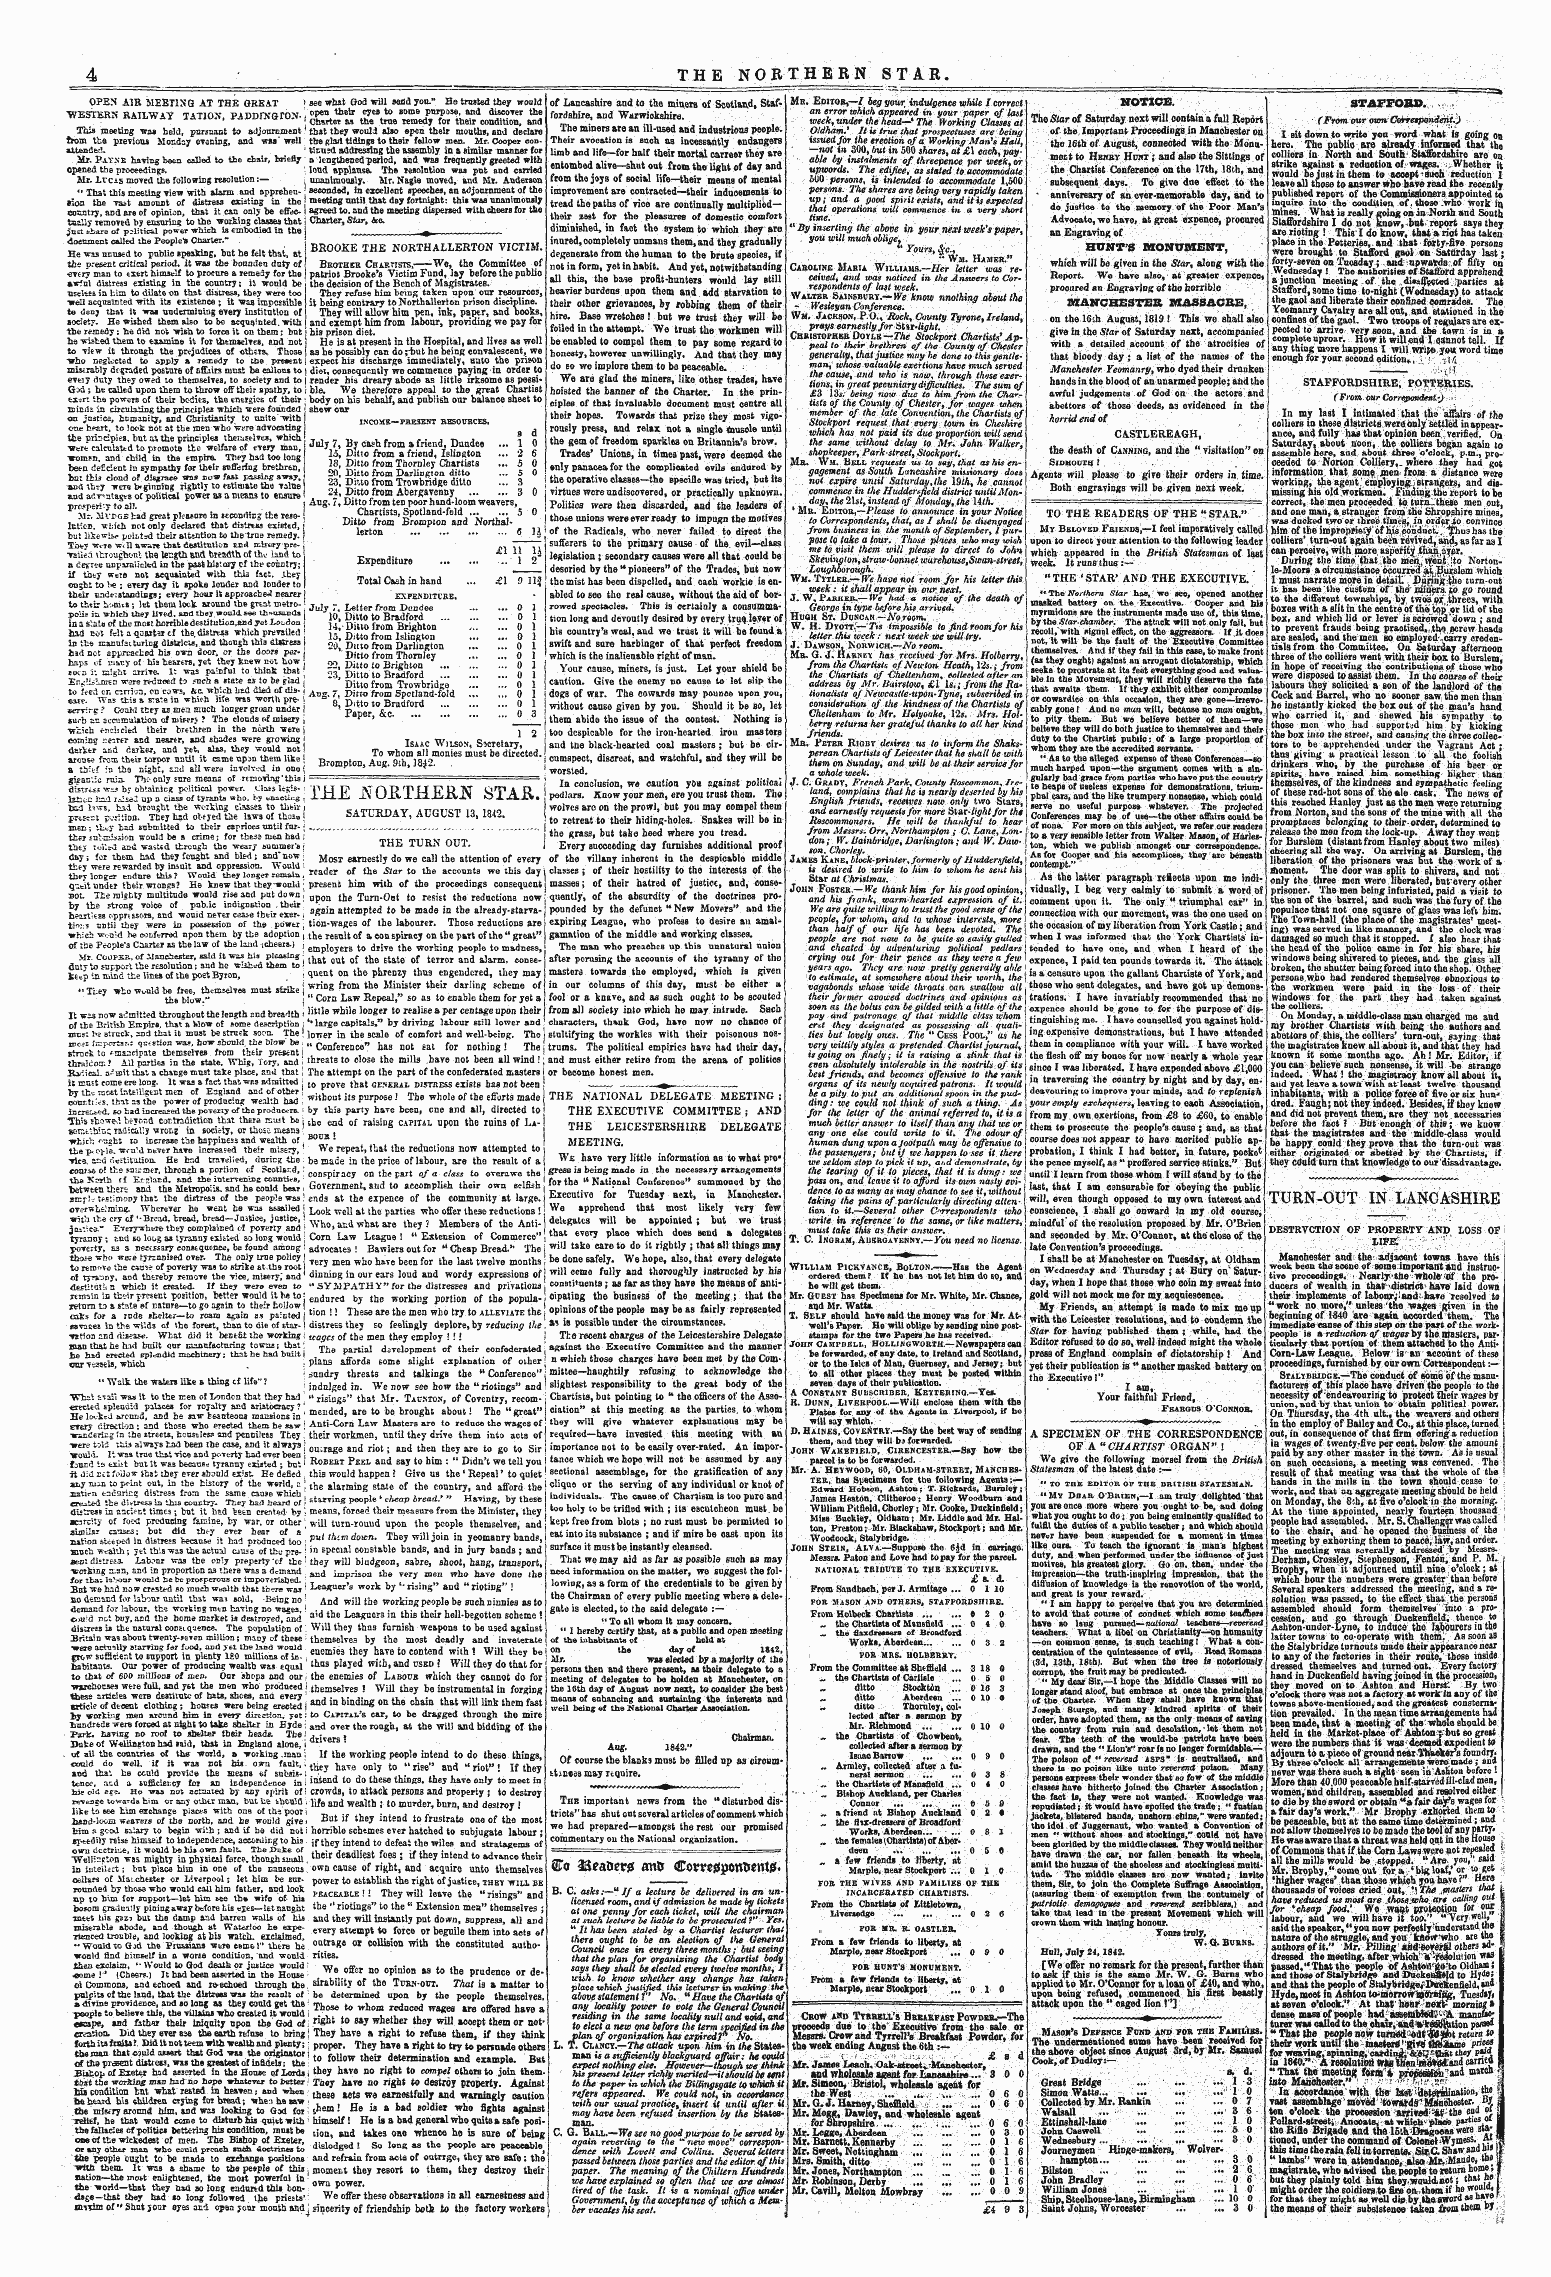 Northern Star (1837-1852): jS F Y, 5th edition: 4